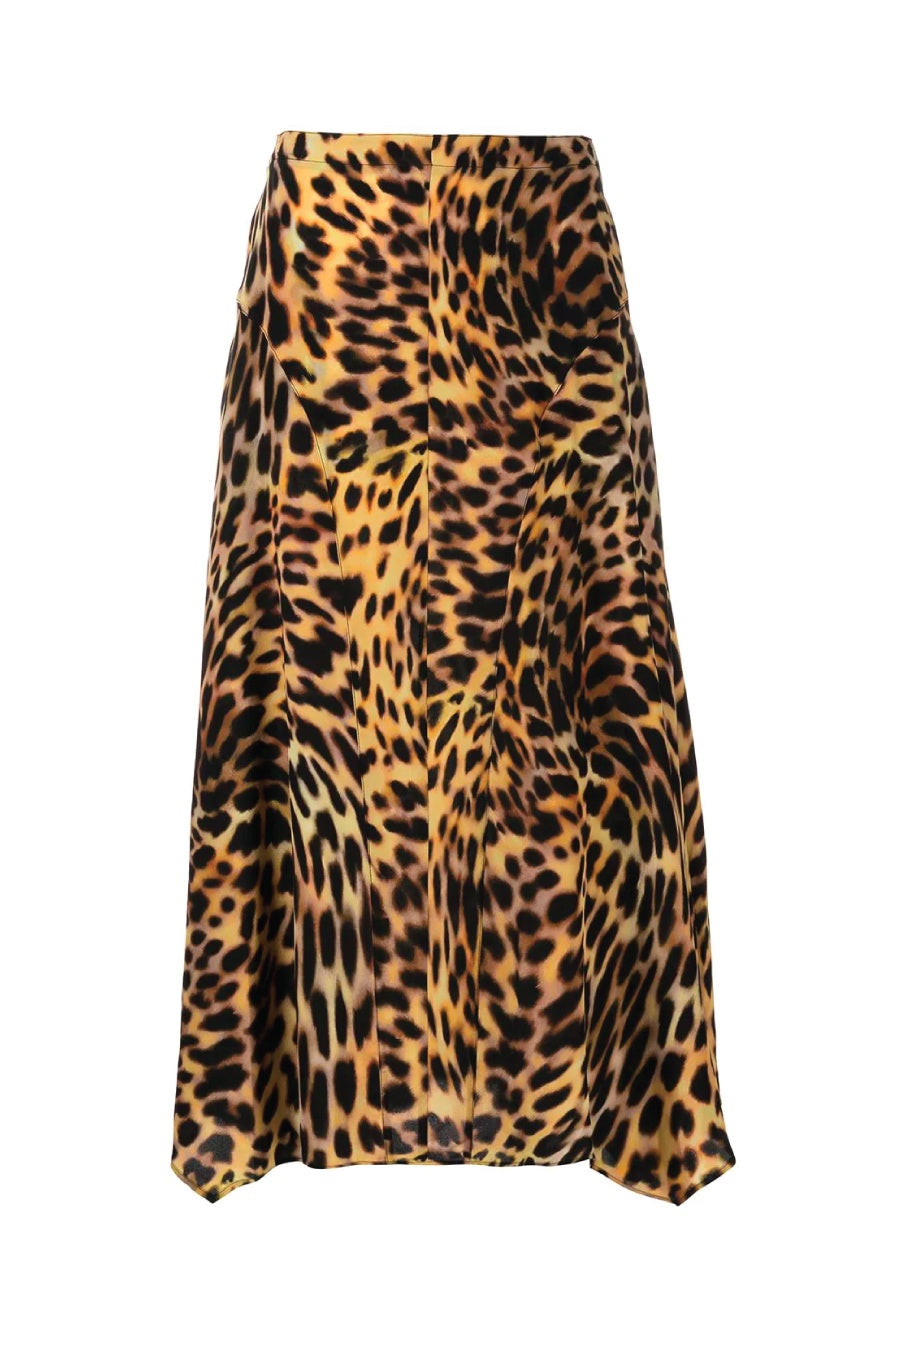 Stella McCartney Naya Cheetah Print Silk Skirt - Tortoiseshell